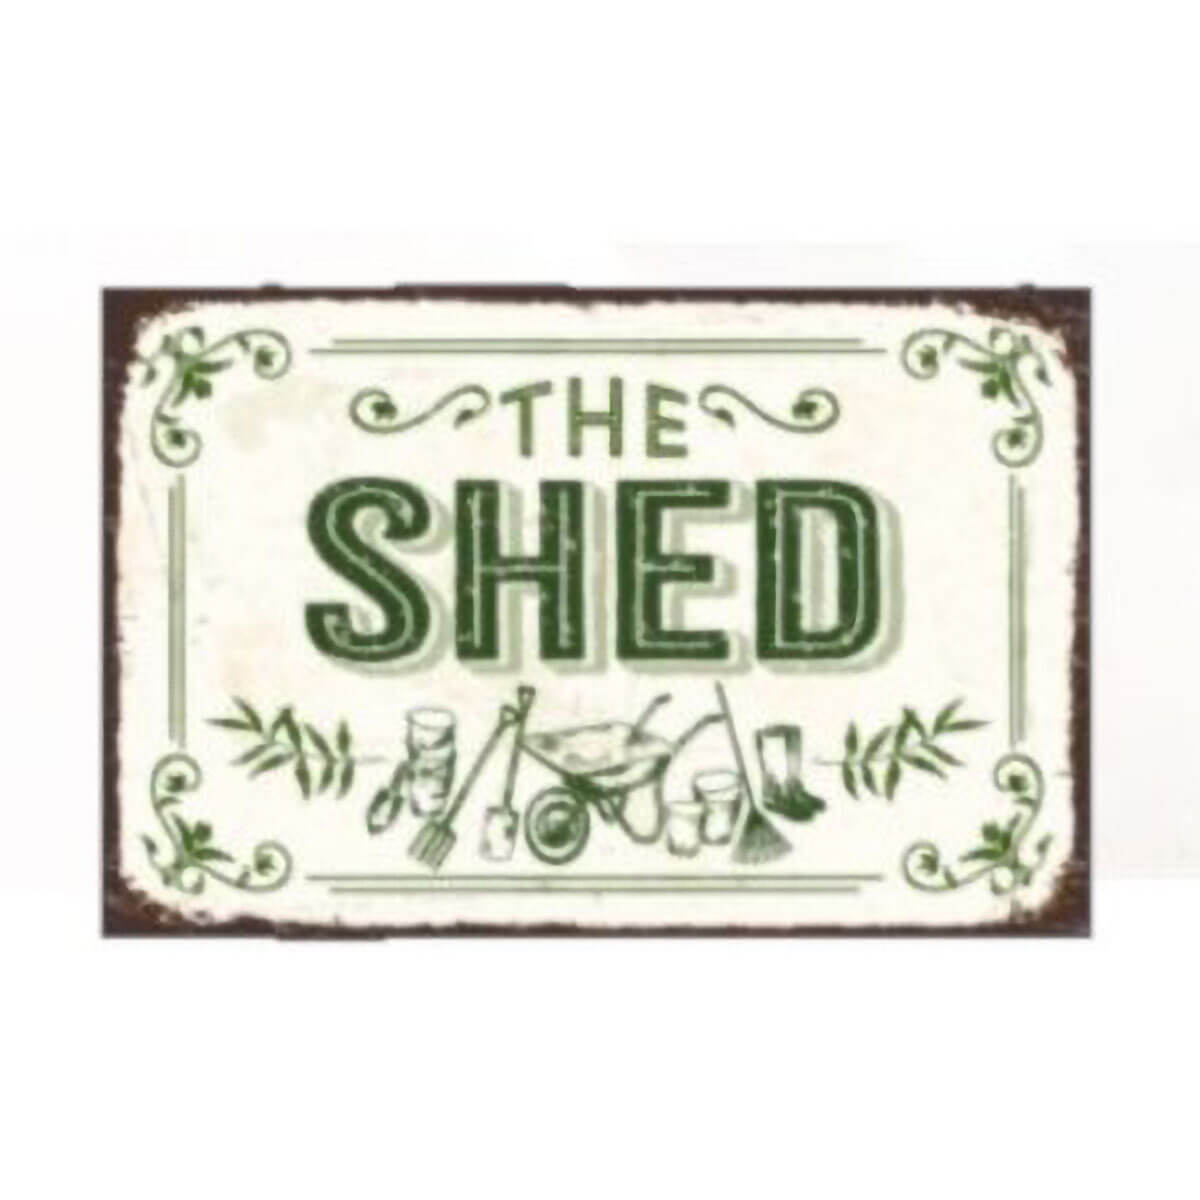 Vintage Embossed Metal Garden Sign - The Shed - Alfresco Gardenware